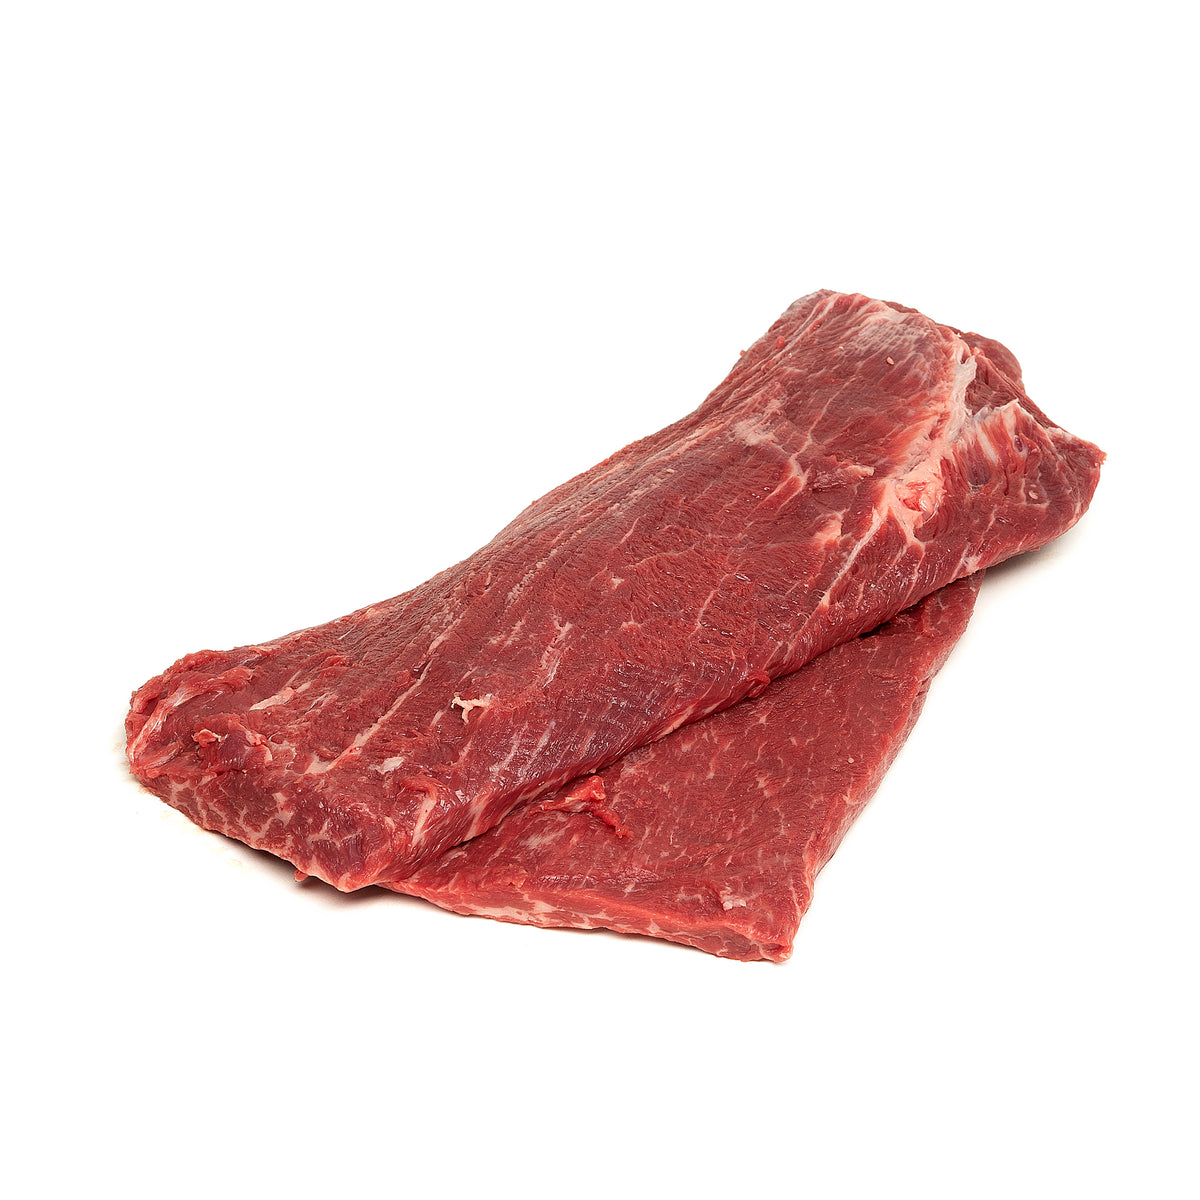 Prime Top Blade Steak Sale $7.99/lb @Broward Meat & Fish : r